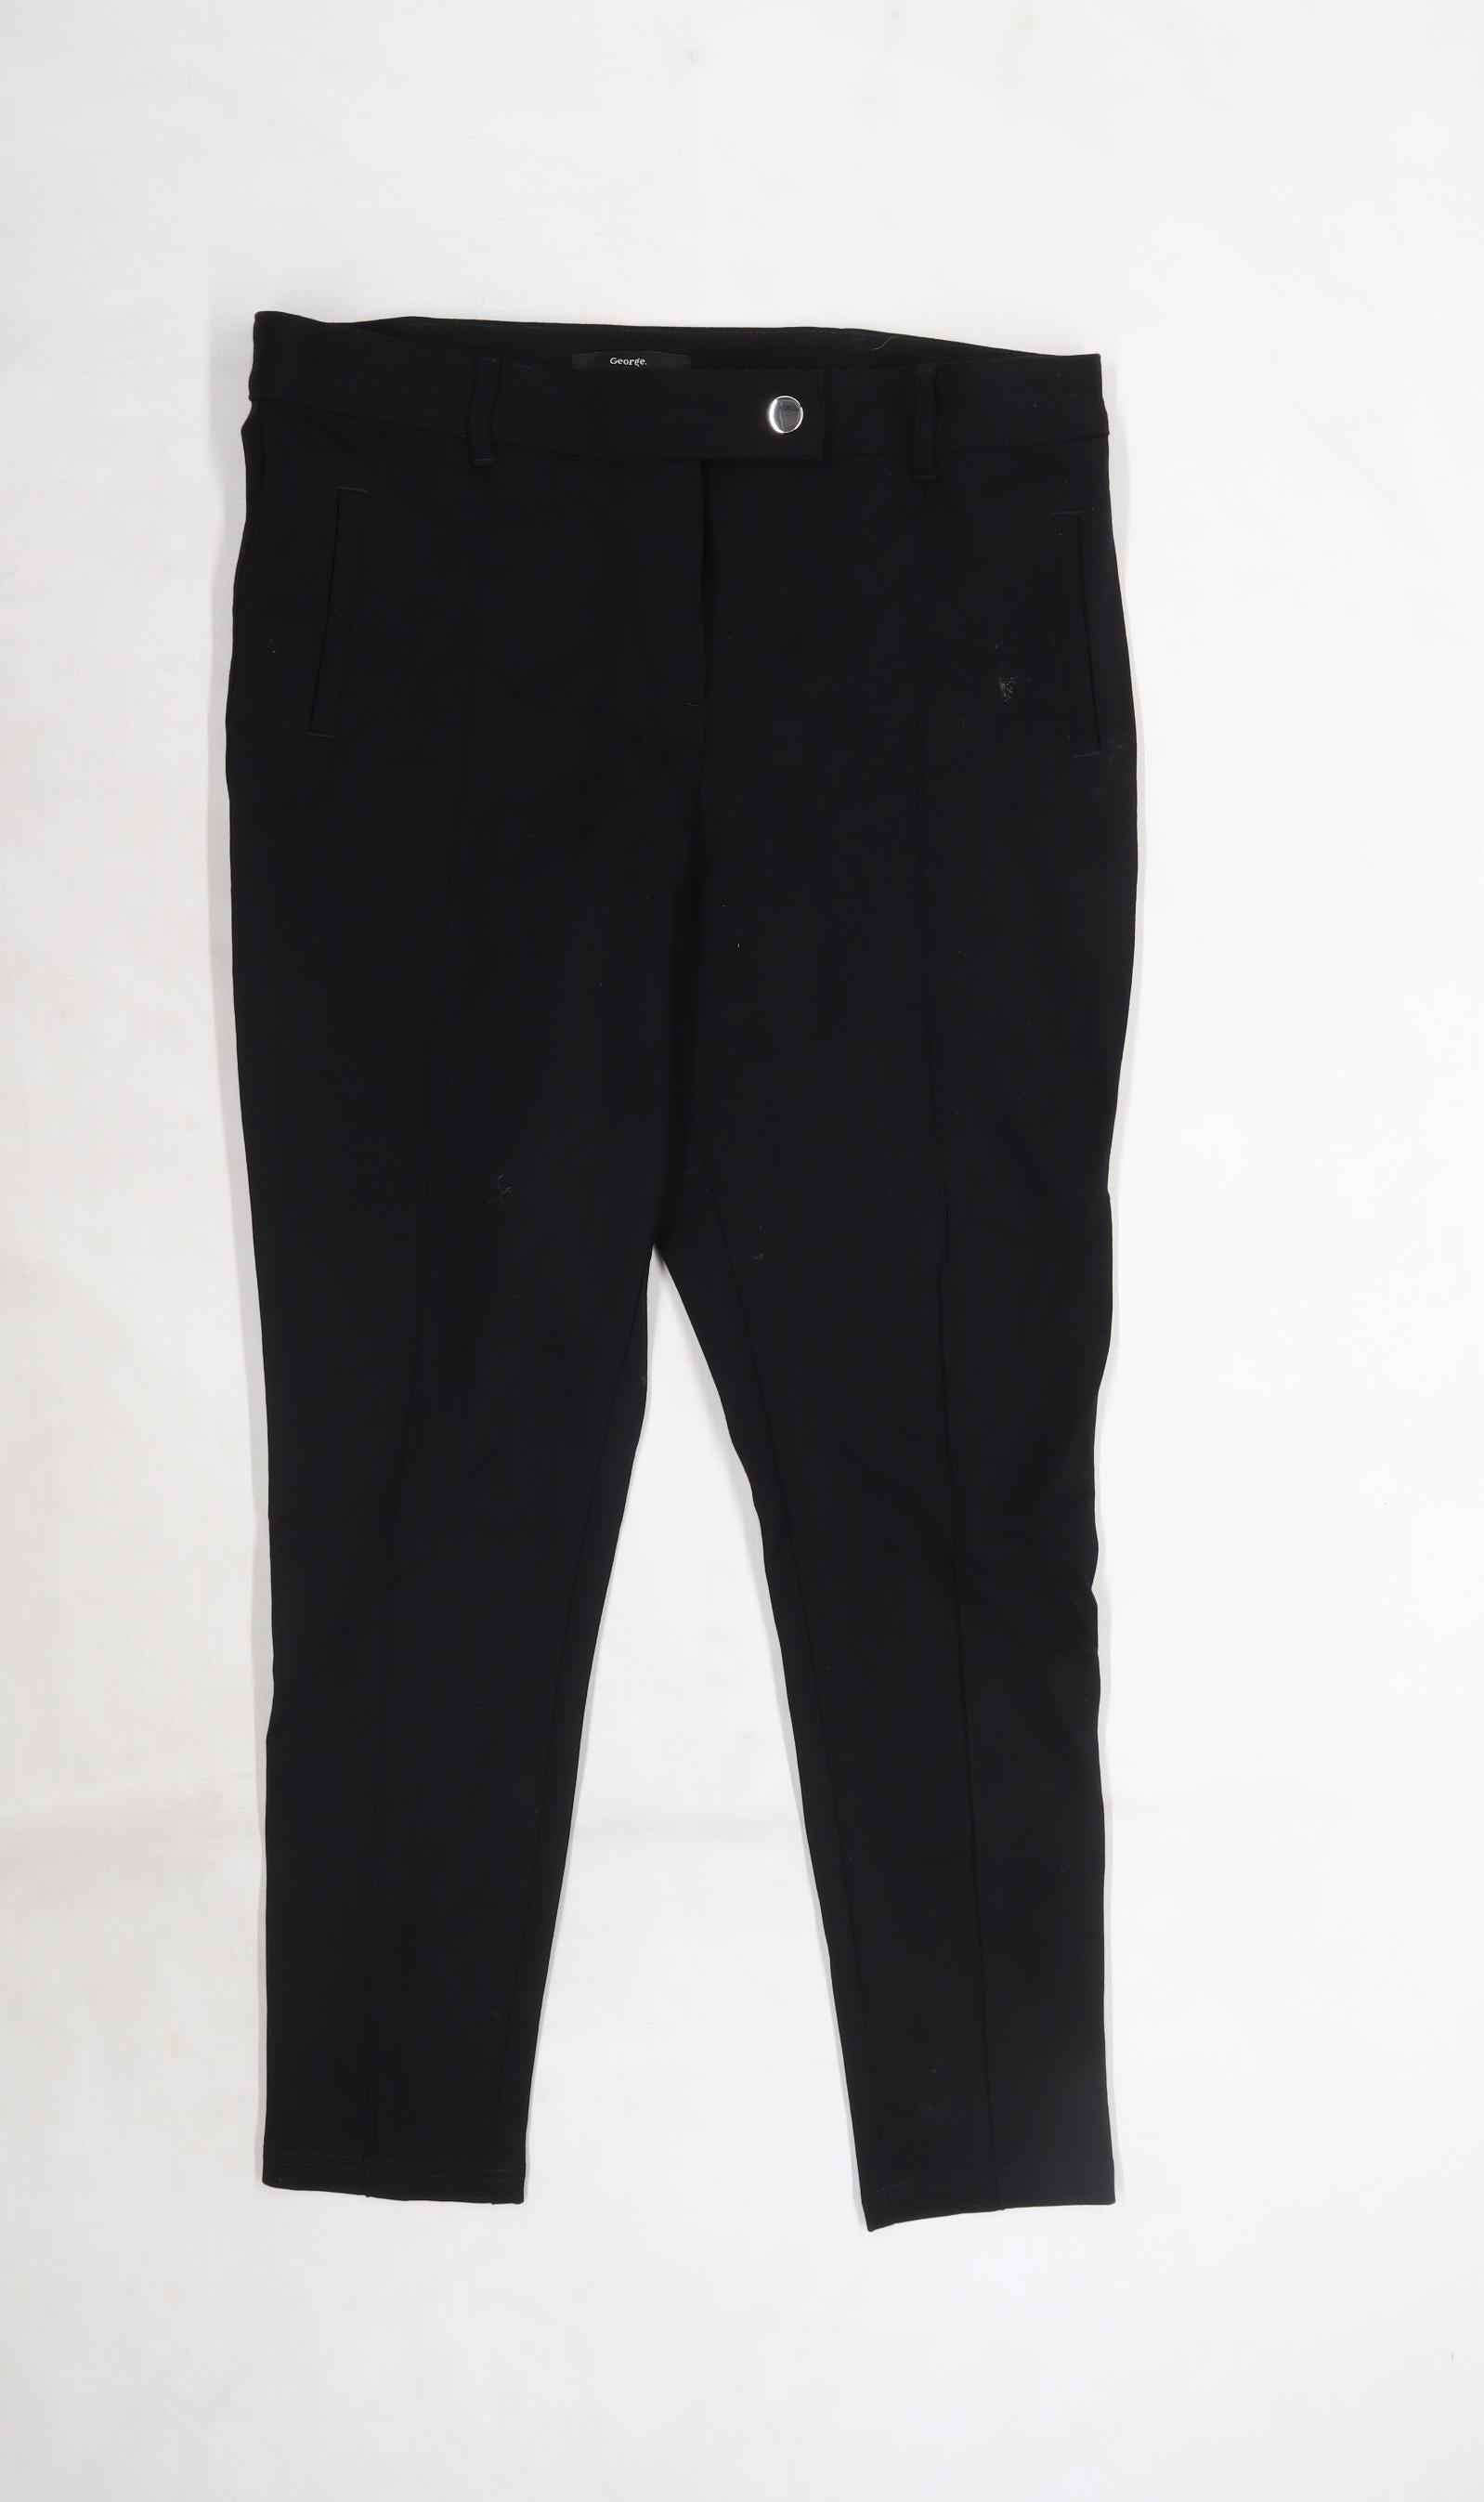 George Gross Black Pants 8 - Reluv Clothing Australia